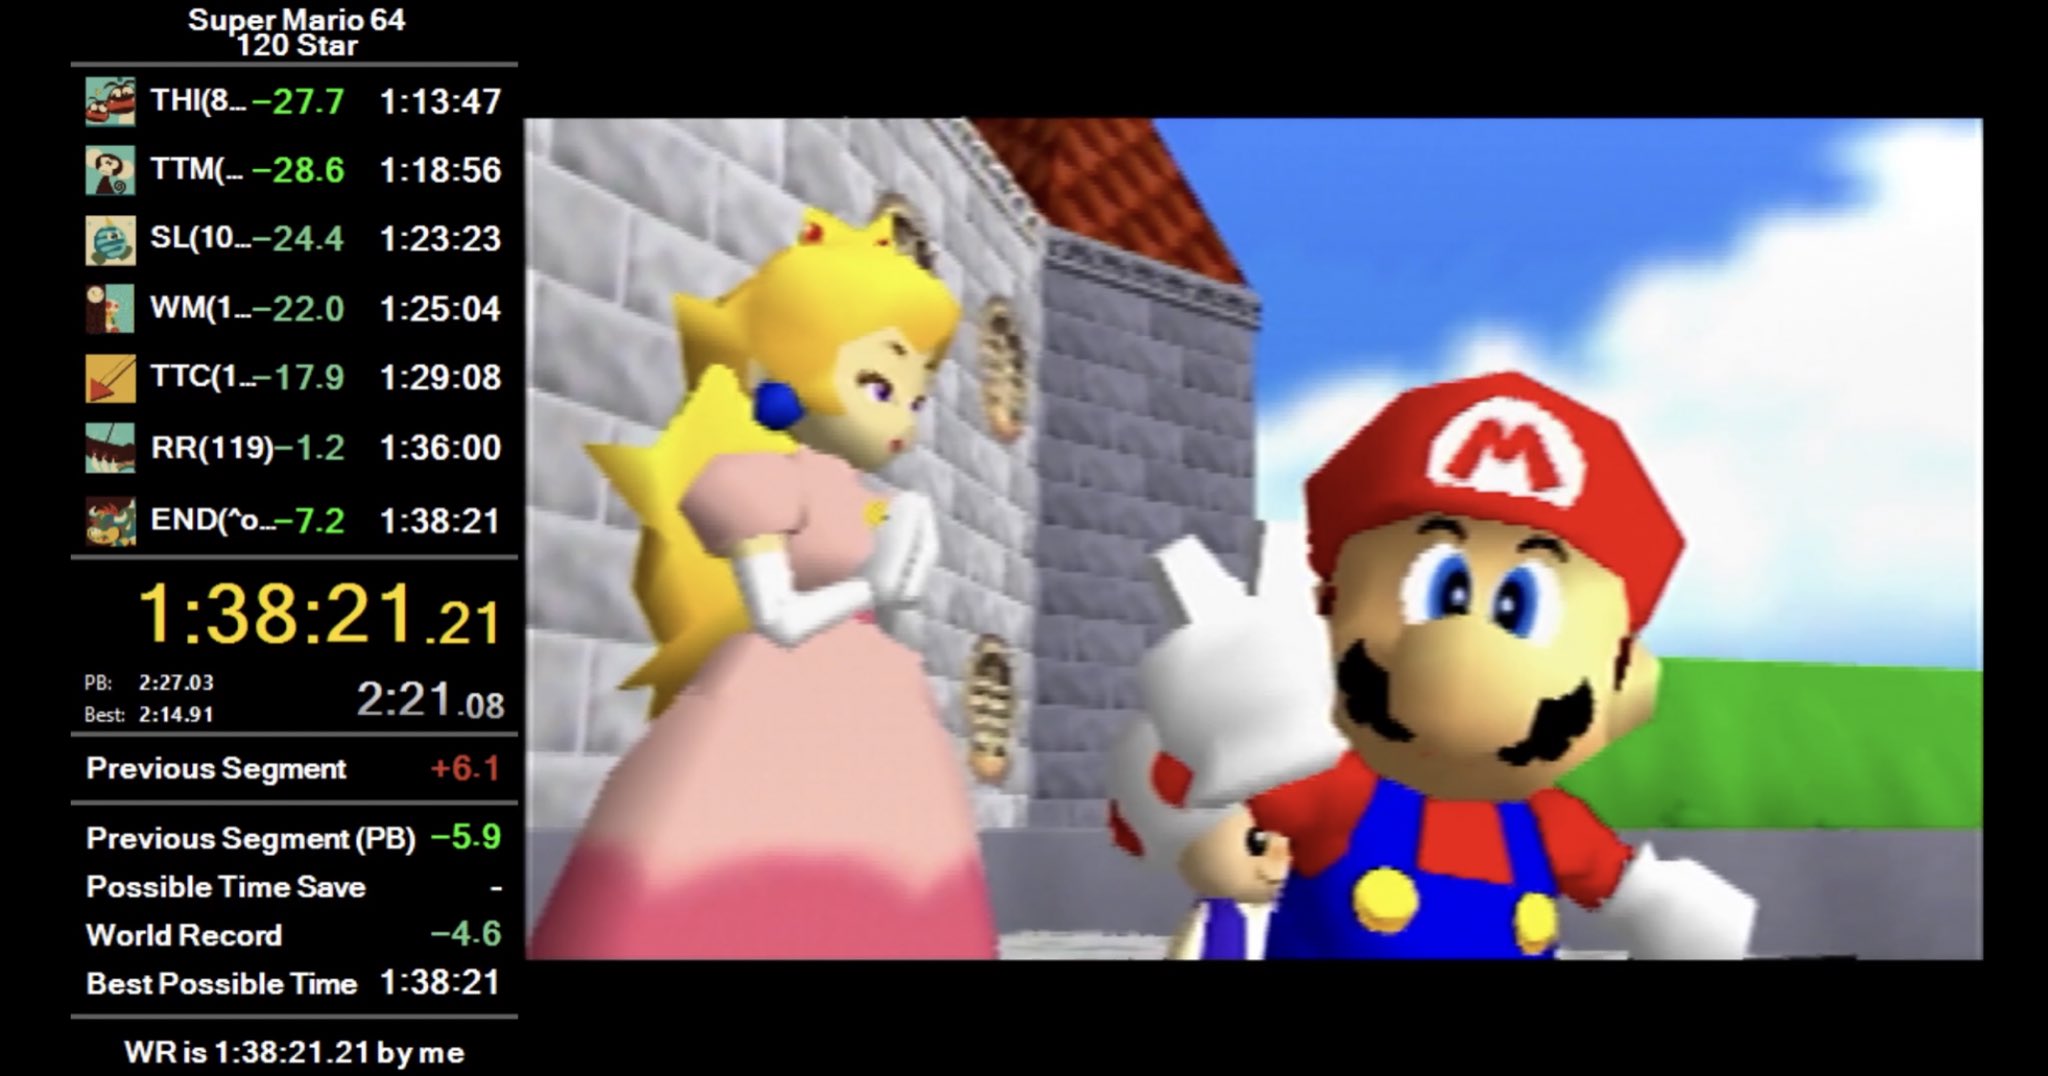 Super Mario 64's 120 star speedrun world record has been broken by a Japanese player